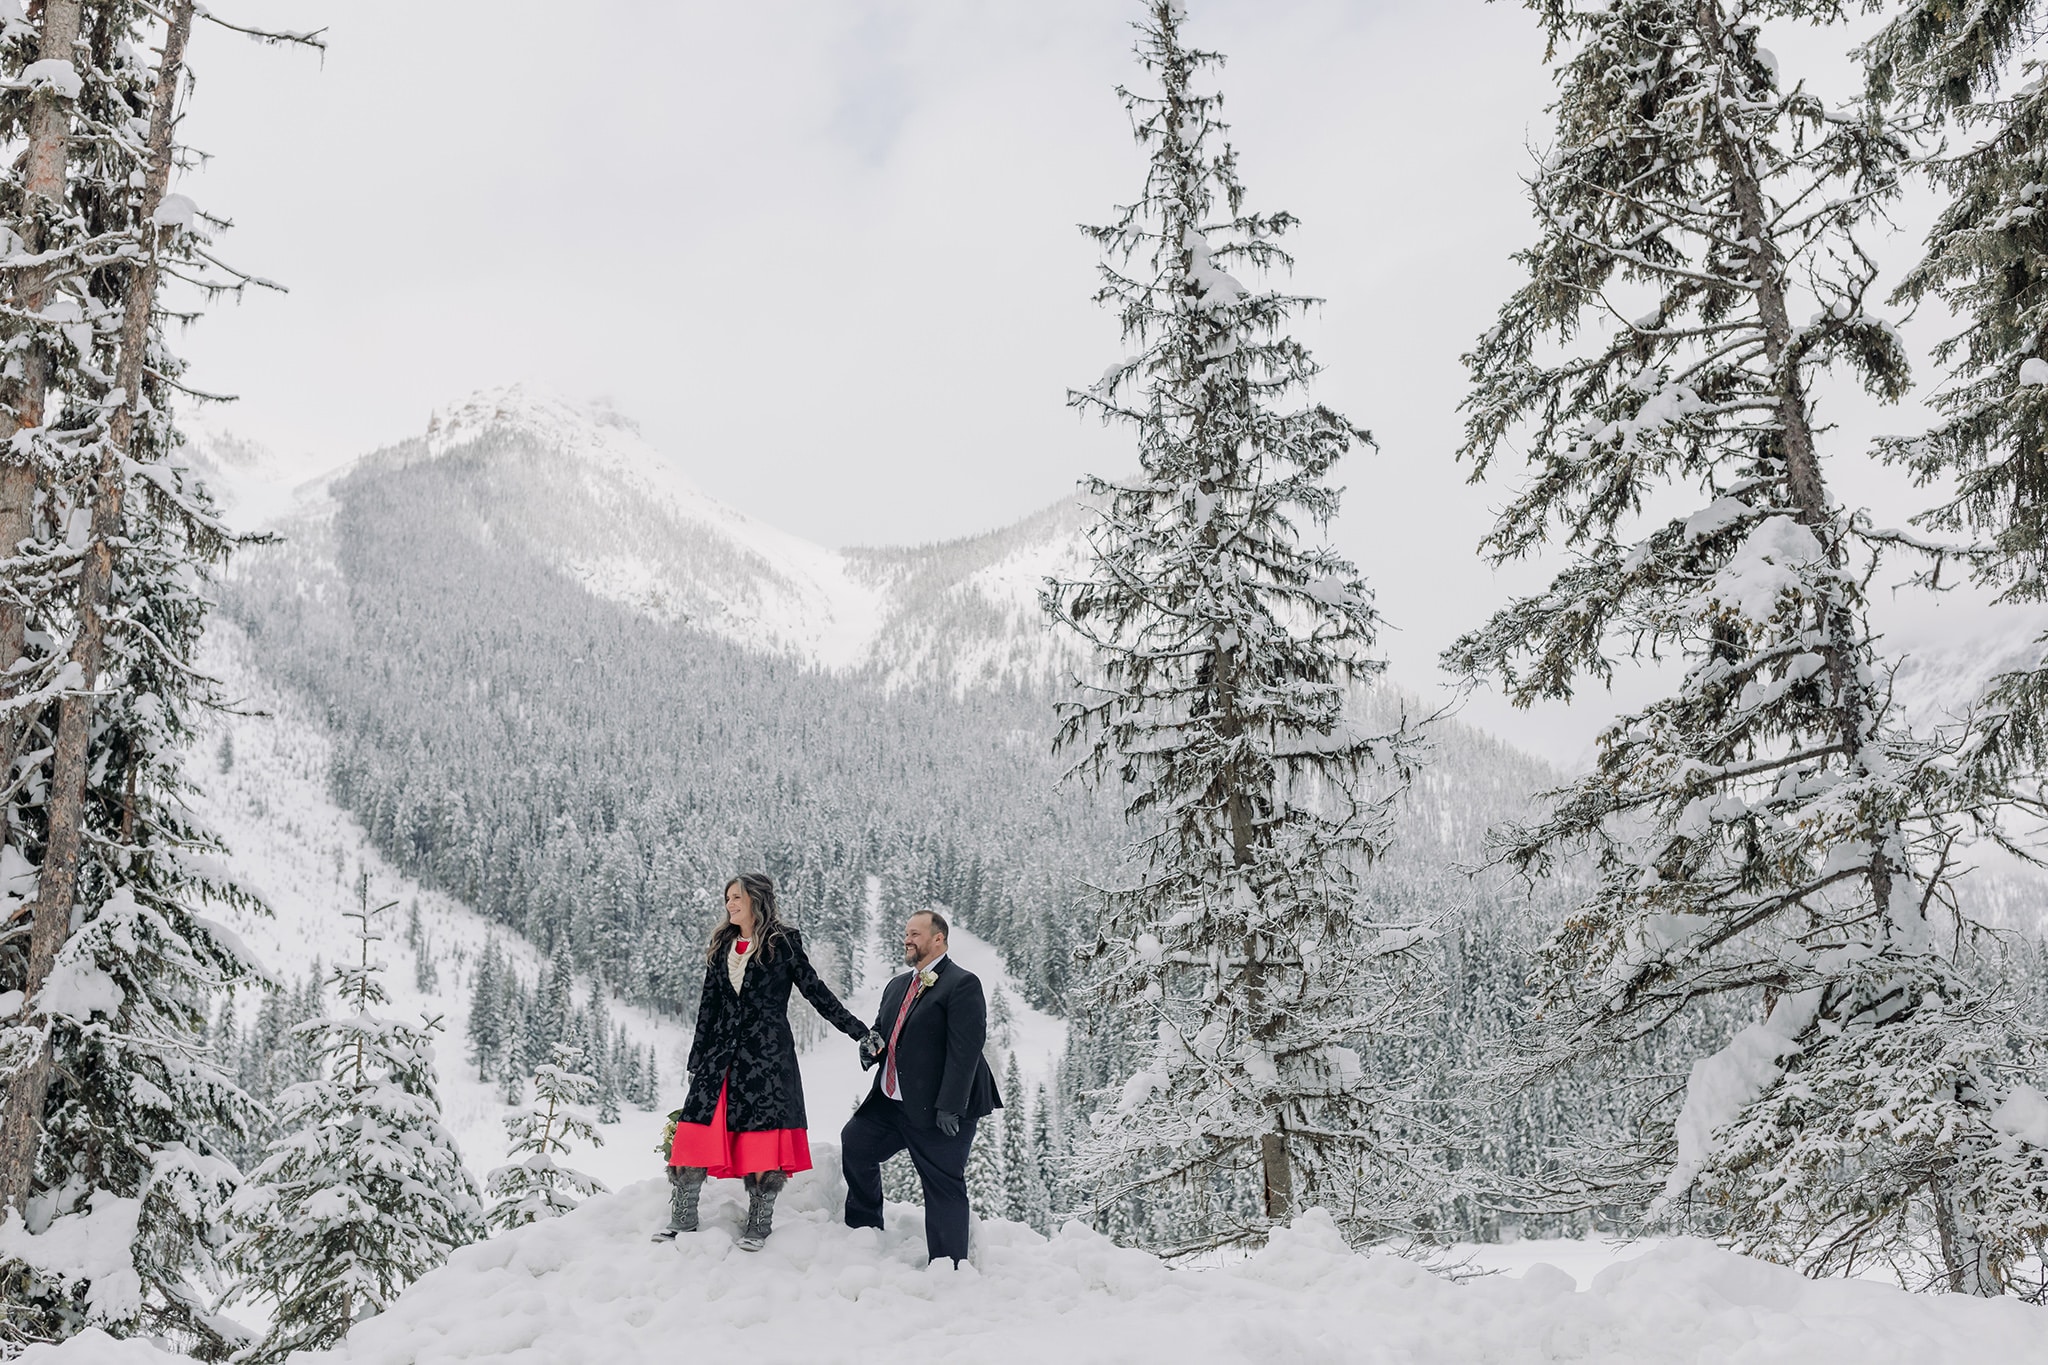 Emerald Lake Lodge Winter elopement bridal groom wedding portraits in the snow